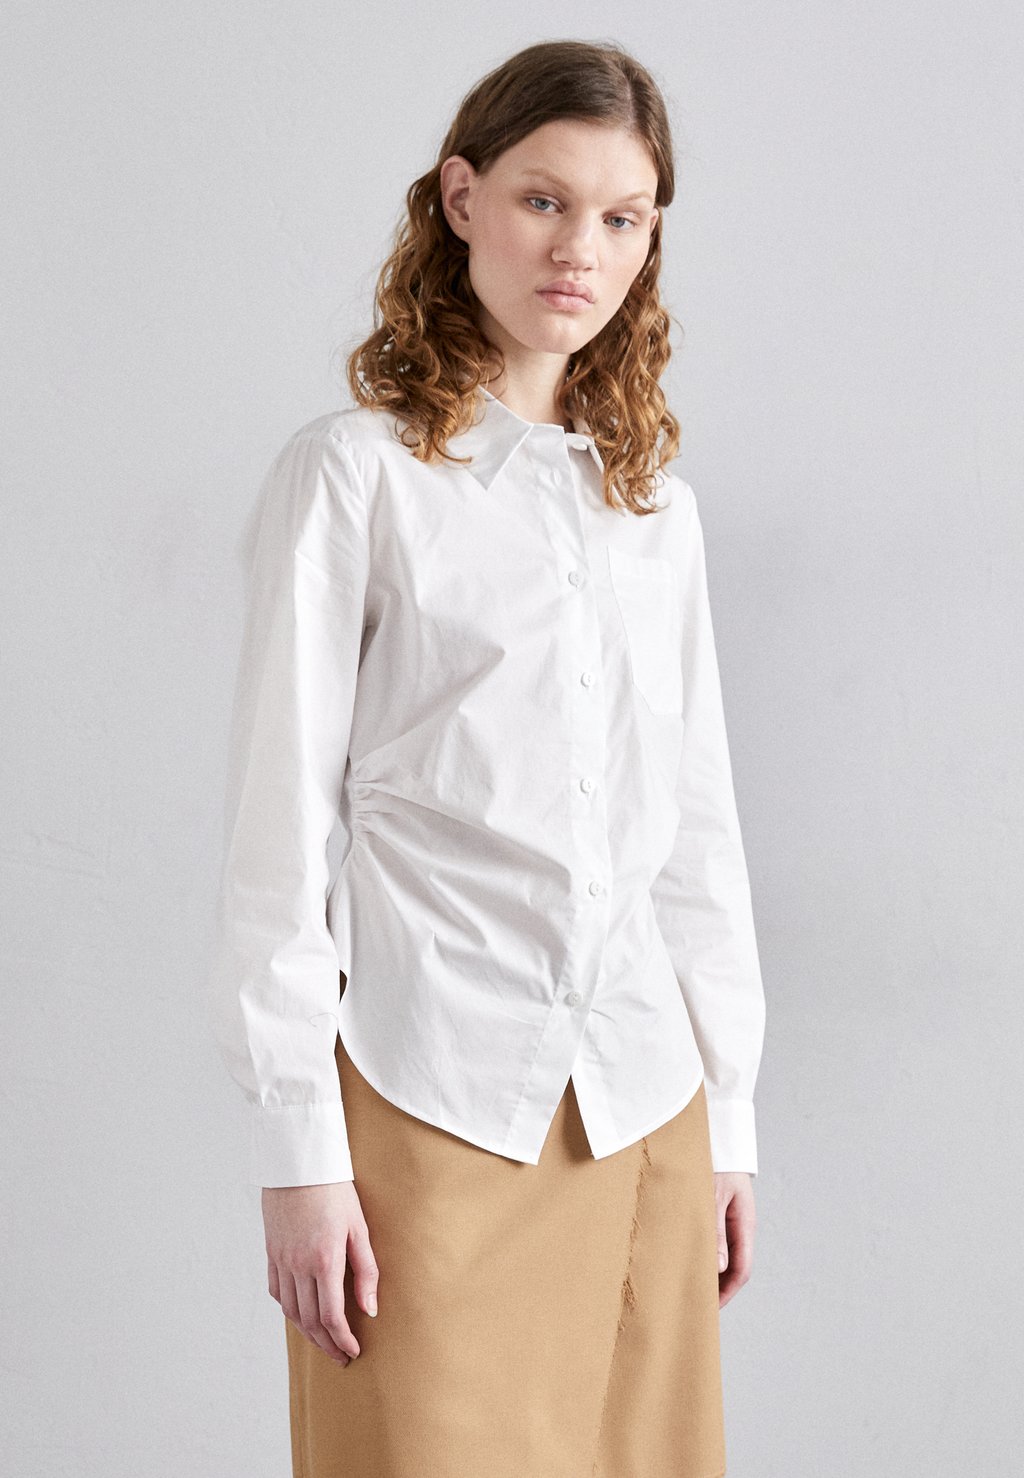 Блузка на пуговицах MARIA Baum und Pferdgarten, белый блузка рубашка madison baum und pferdgarten черный